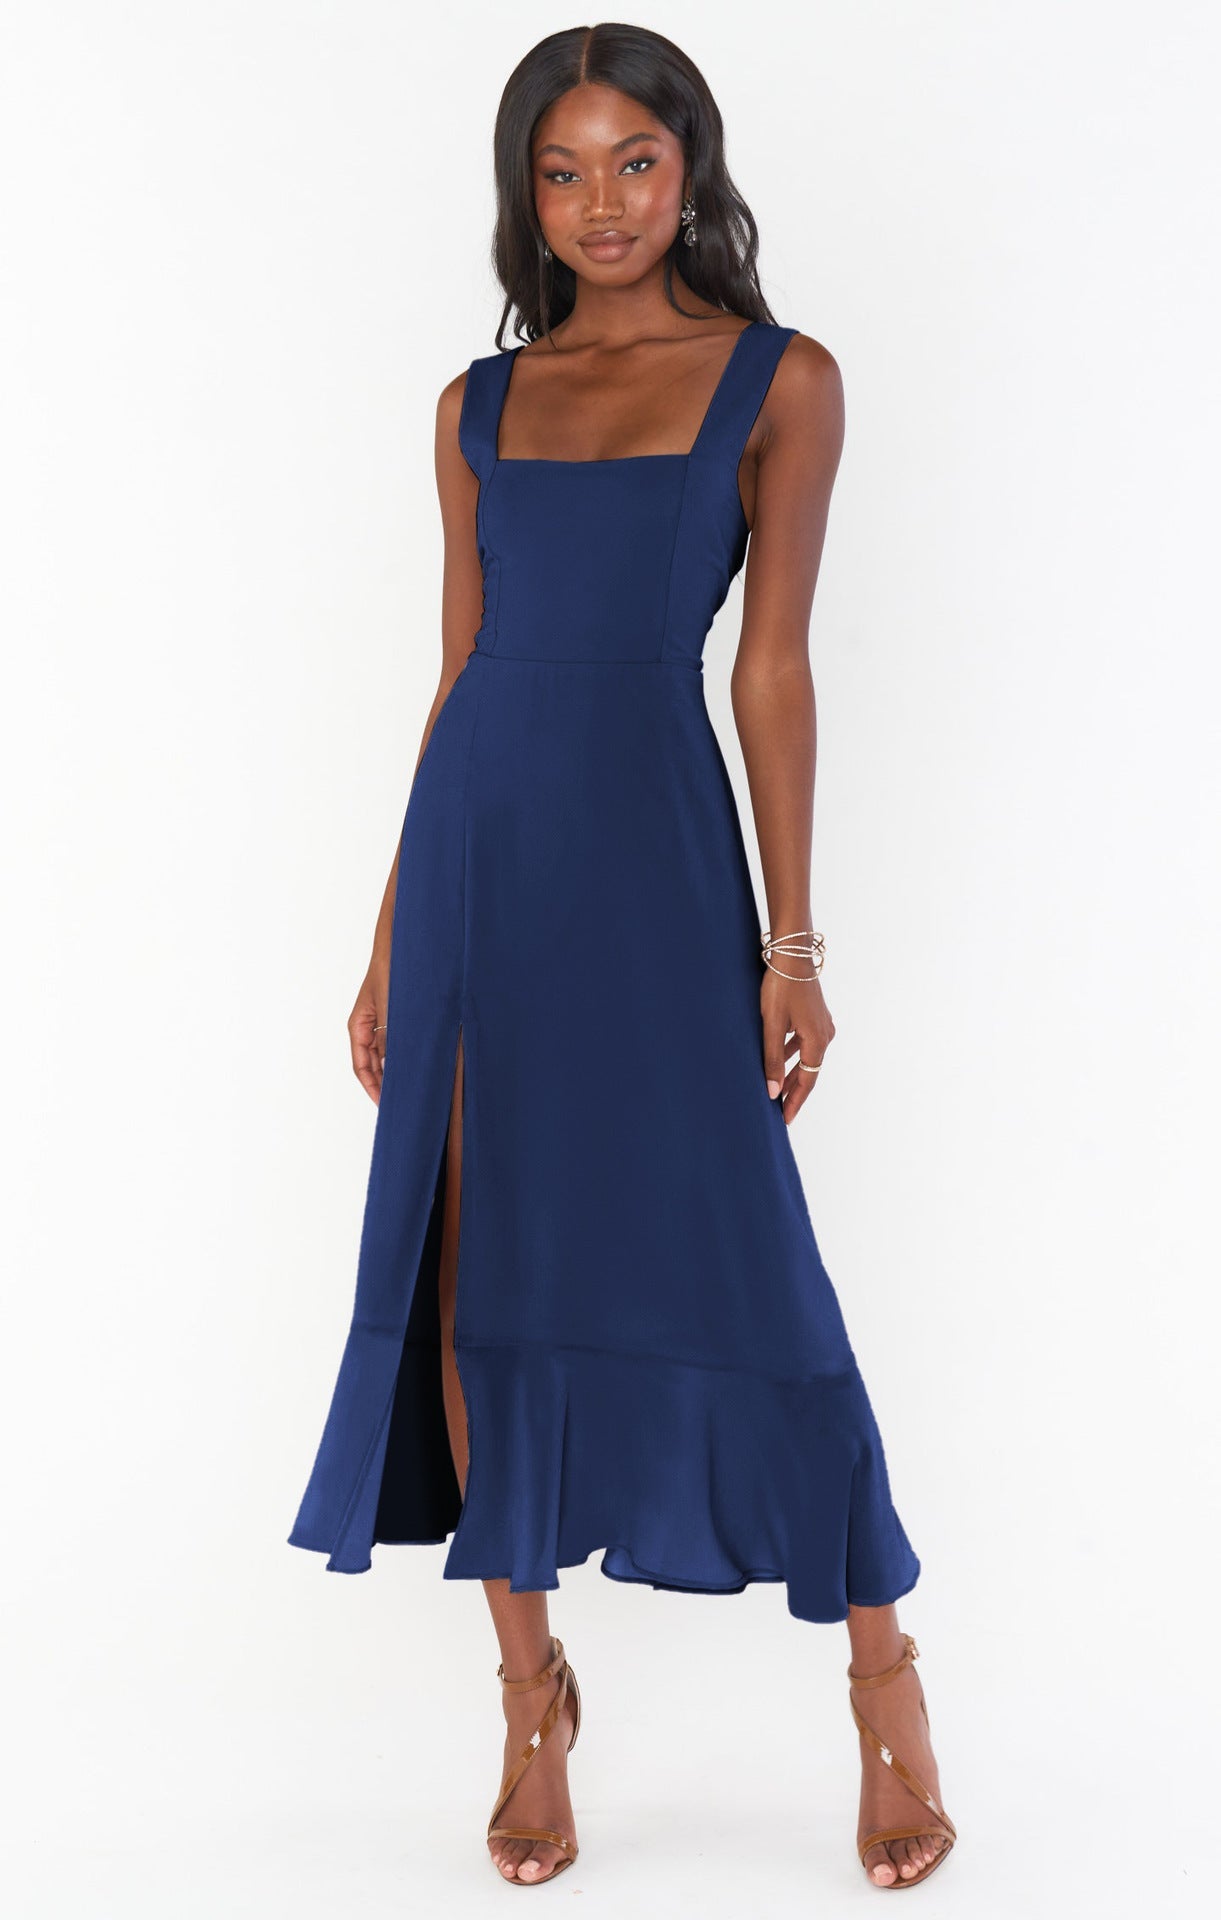 Fashion Summer Split Front Midi Dresses for Women-Dresses-Black-S-Free Shipping Leatheretro